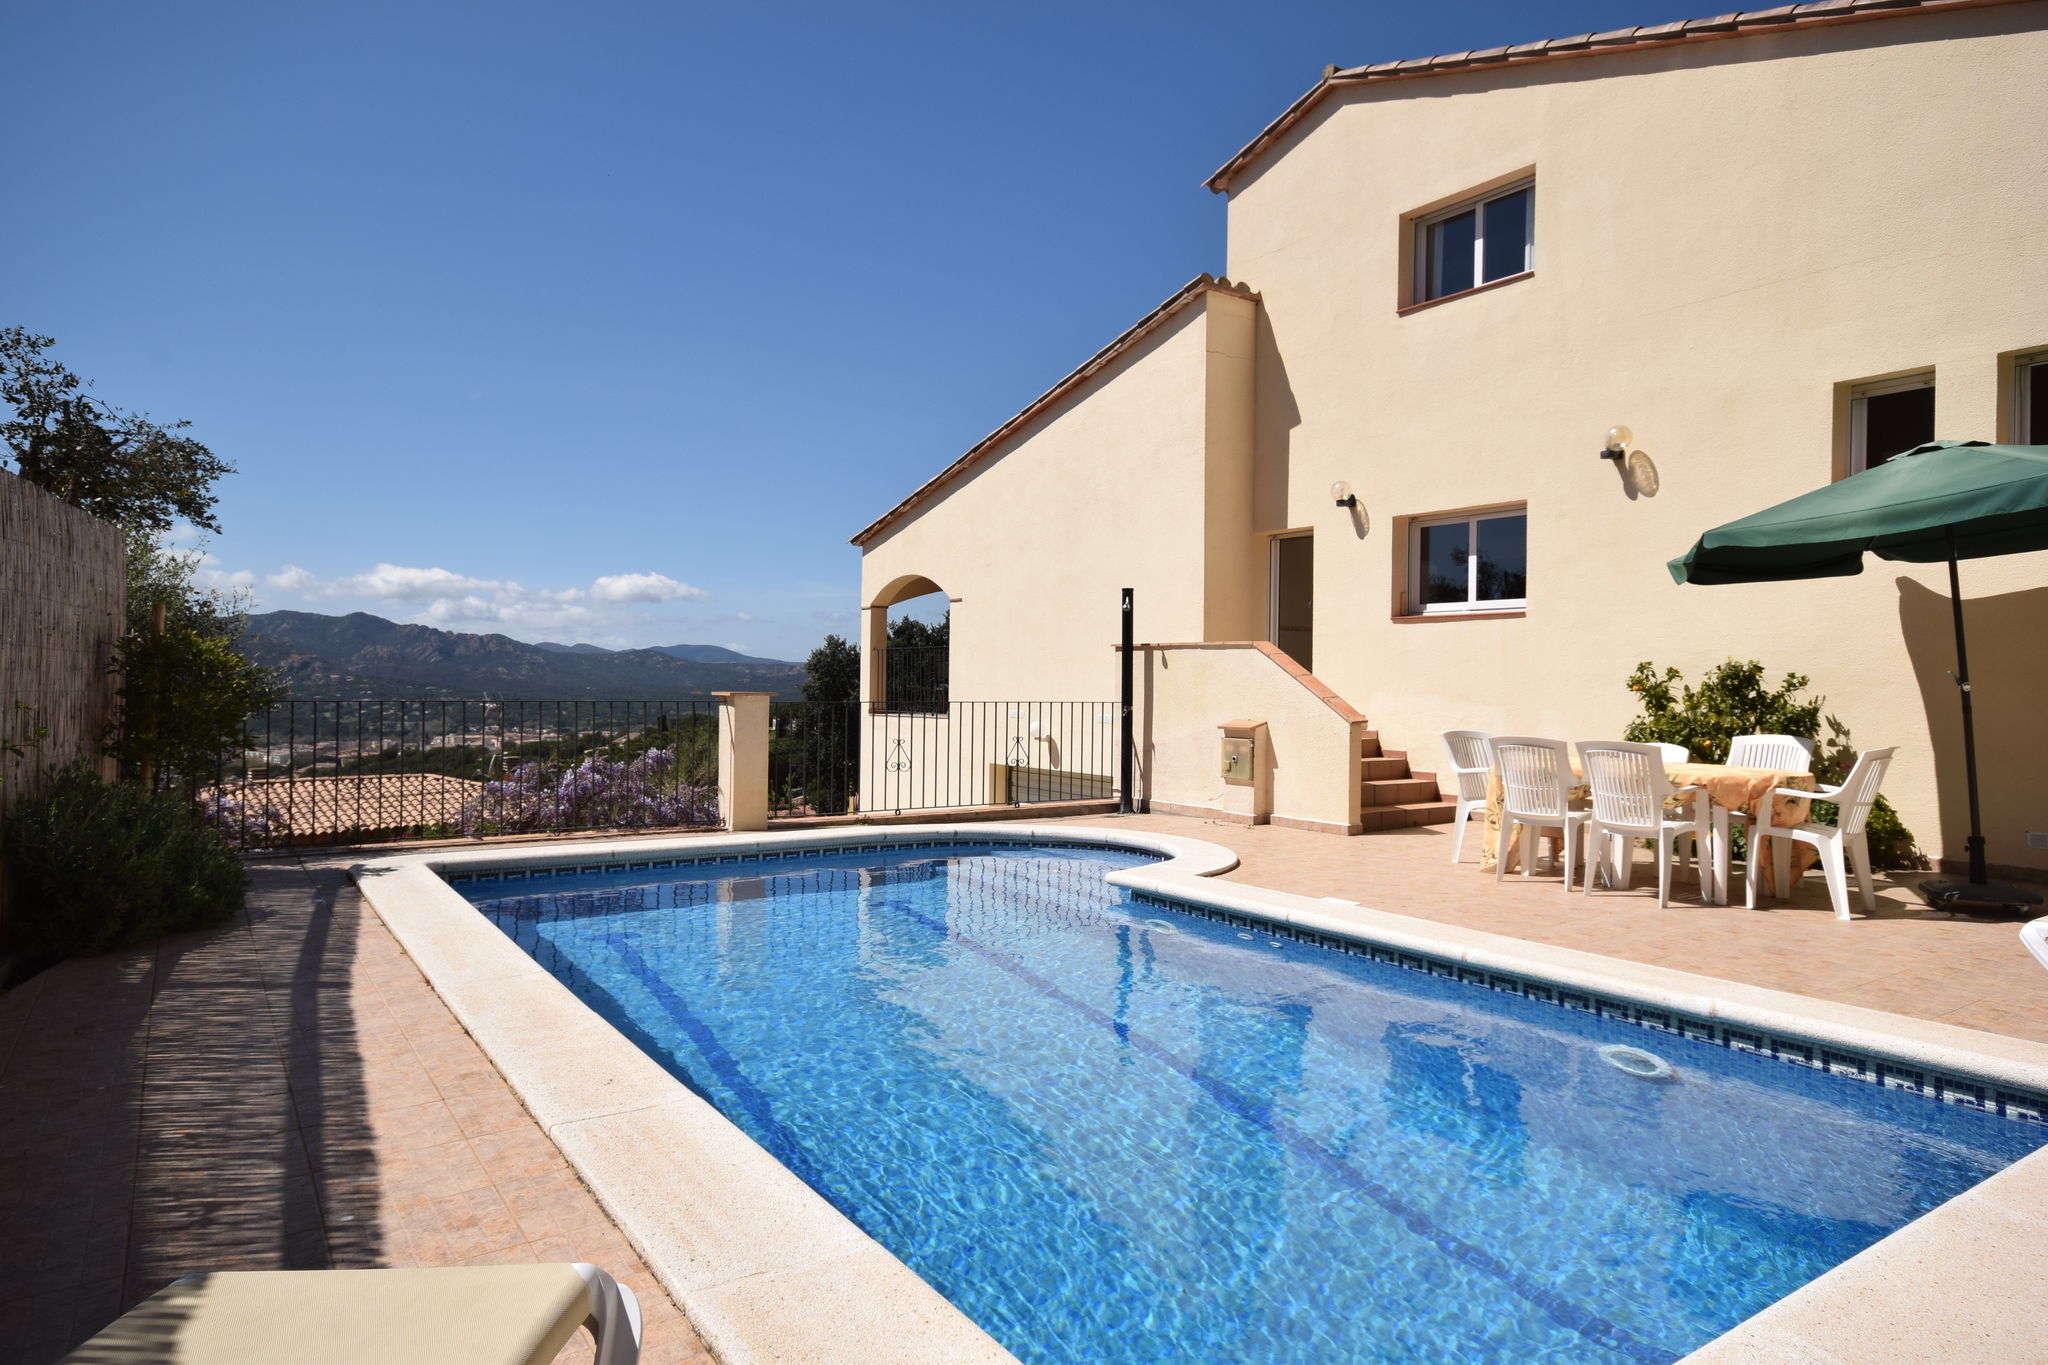 Splendid Villa in Santa Cristina d'Aro with Swimming Pool